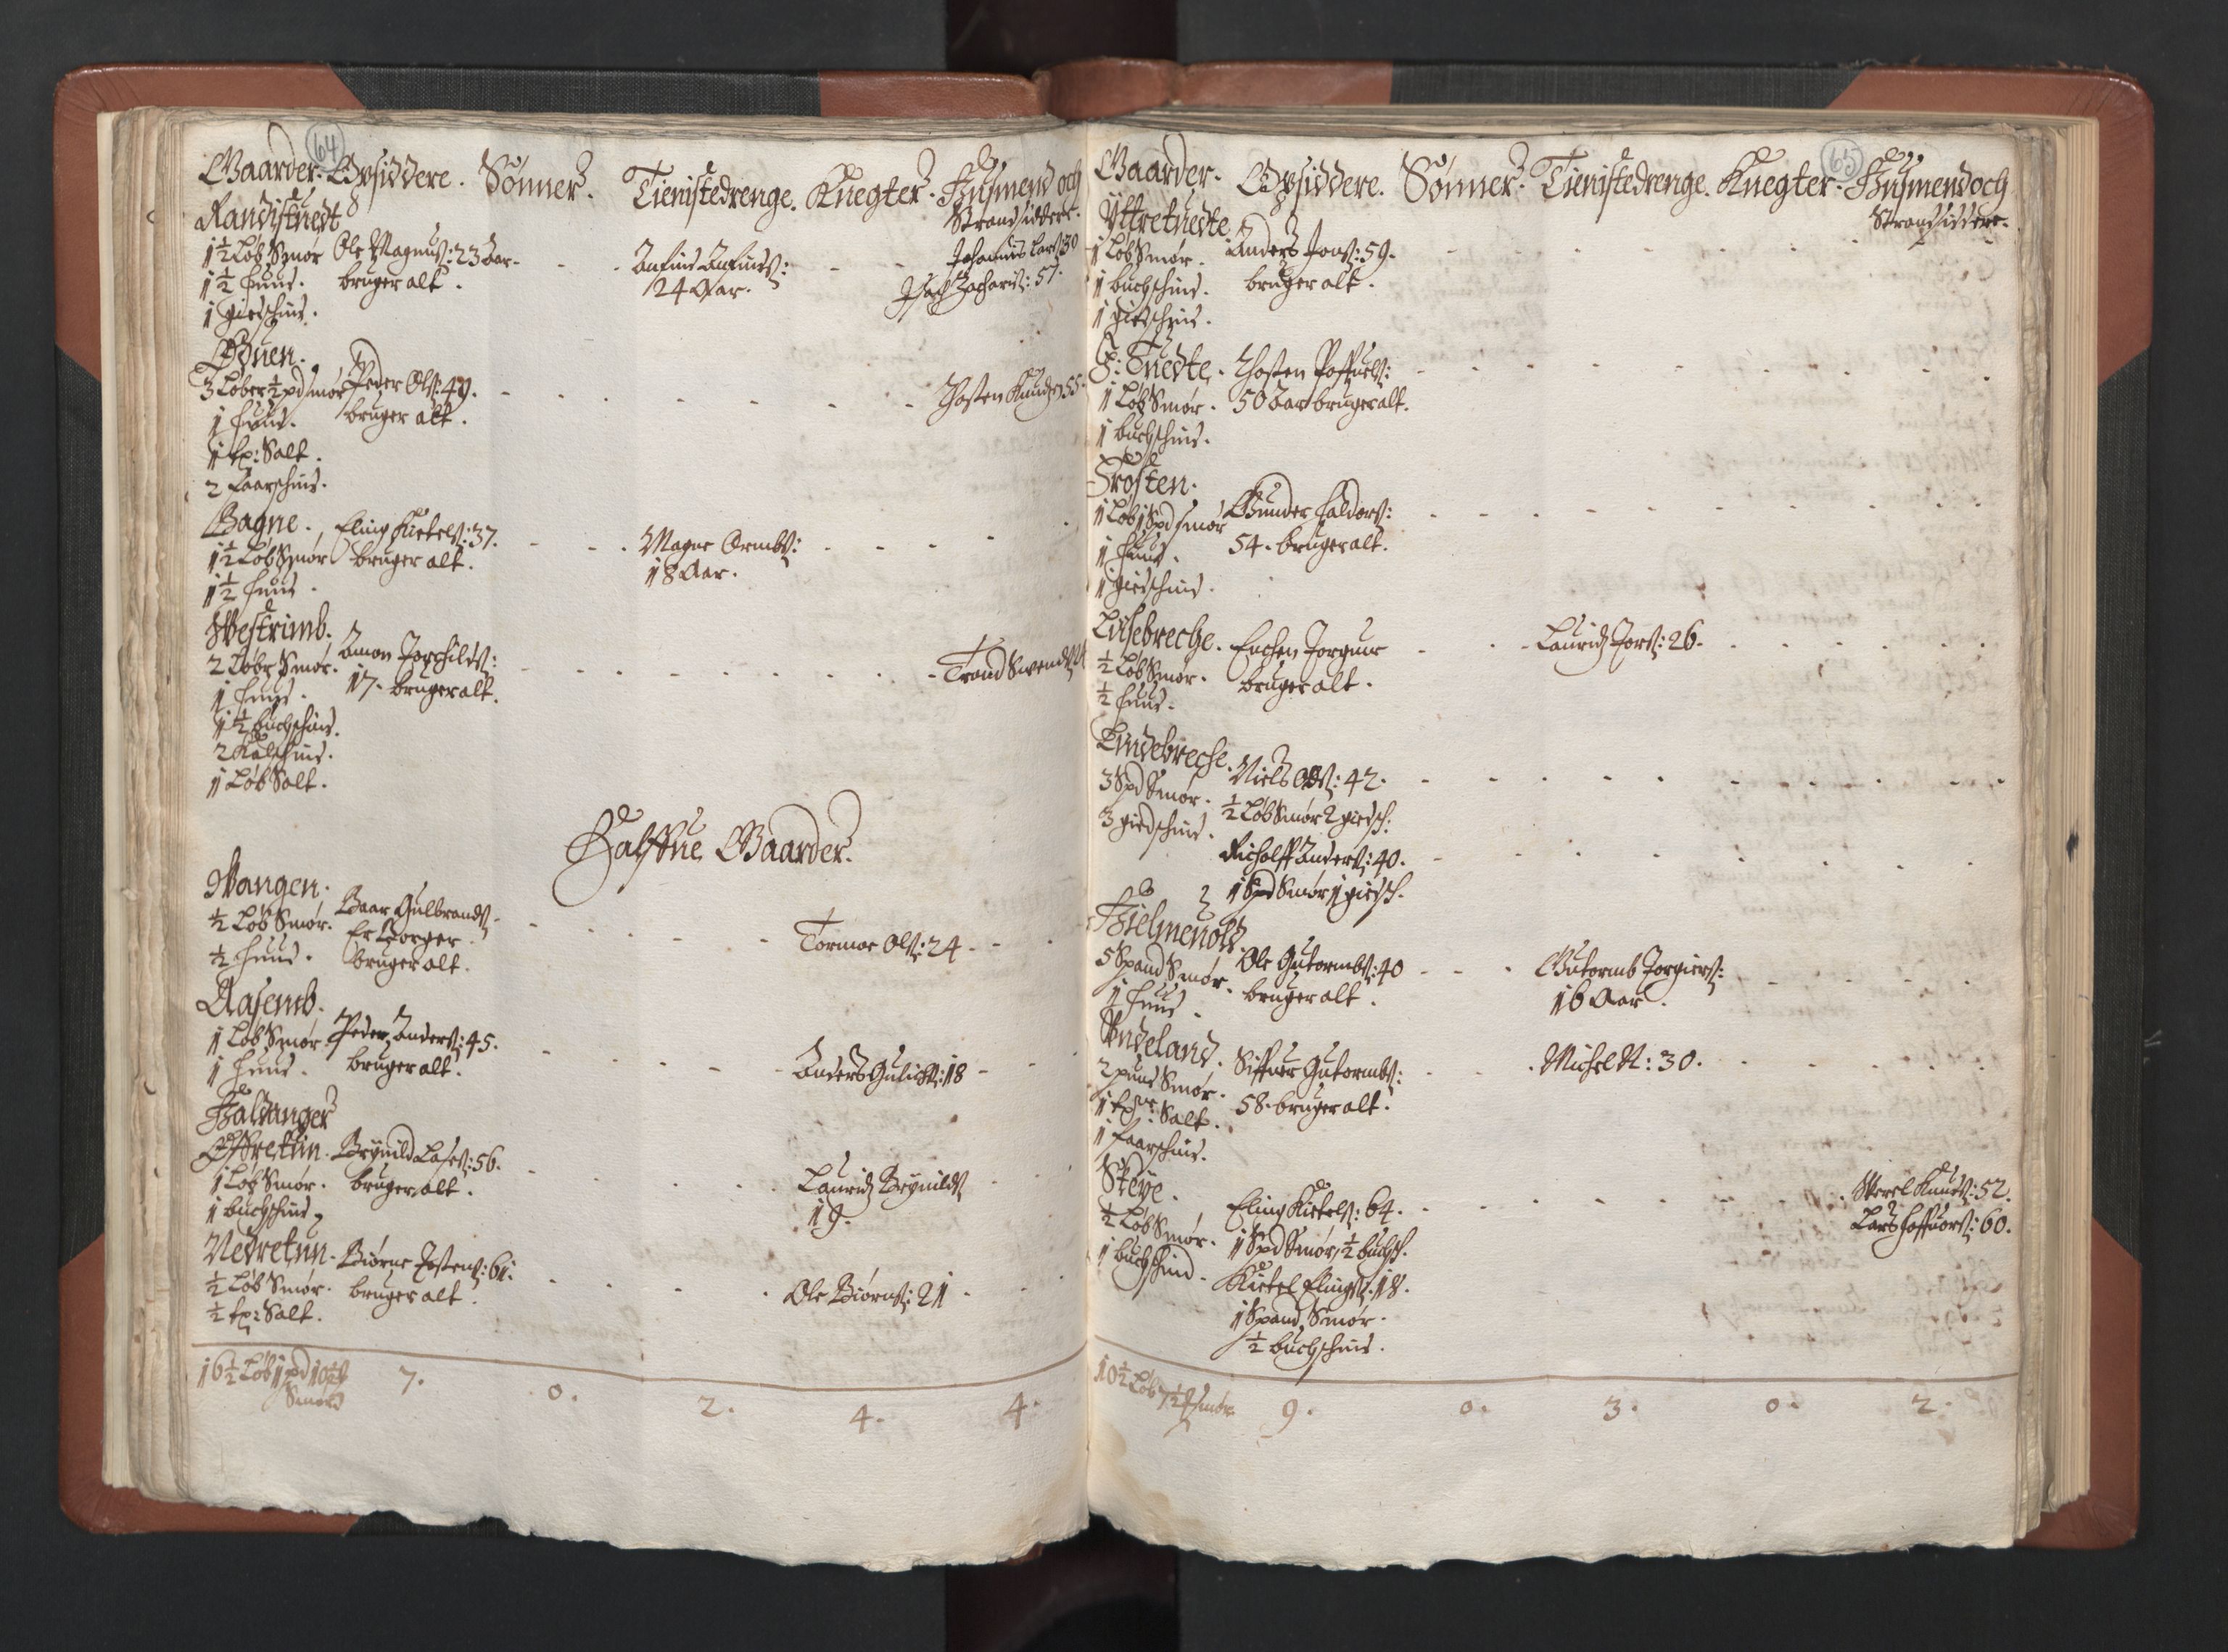 RA, Fogdenes og sorenskrivernes manntall 1664-1666, nr. 14: Hardanger len, Ytre Sogn fogderi og Indre Sogn fogderi, 1664-1665, s. 64-65